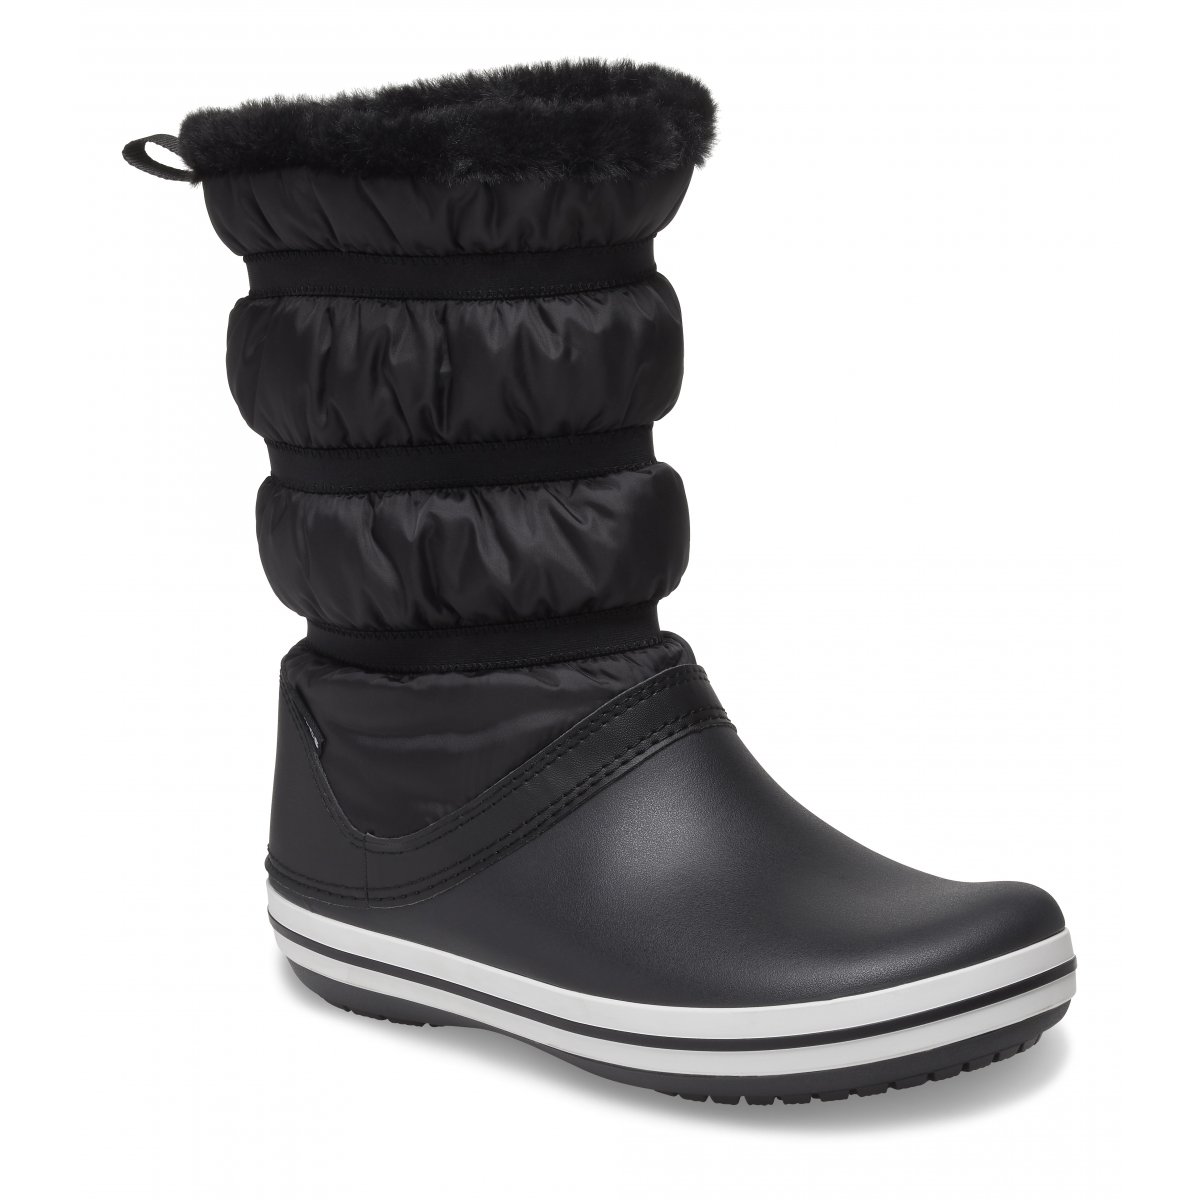 Crocband Winter Boot W